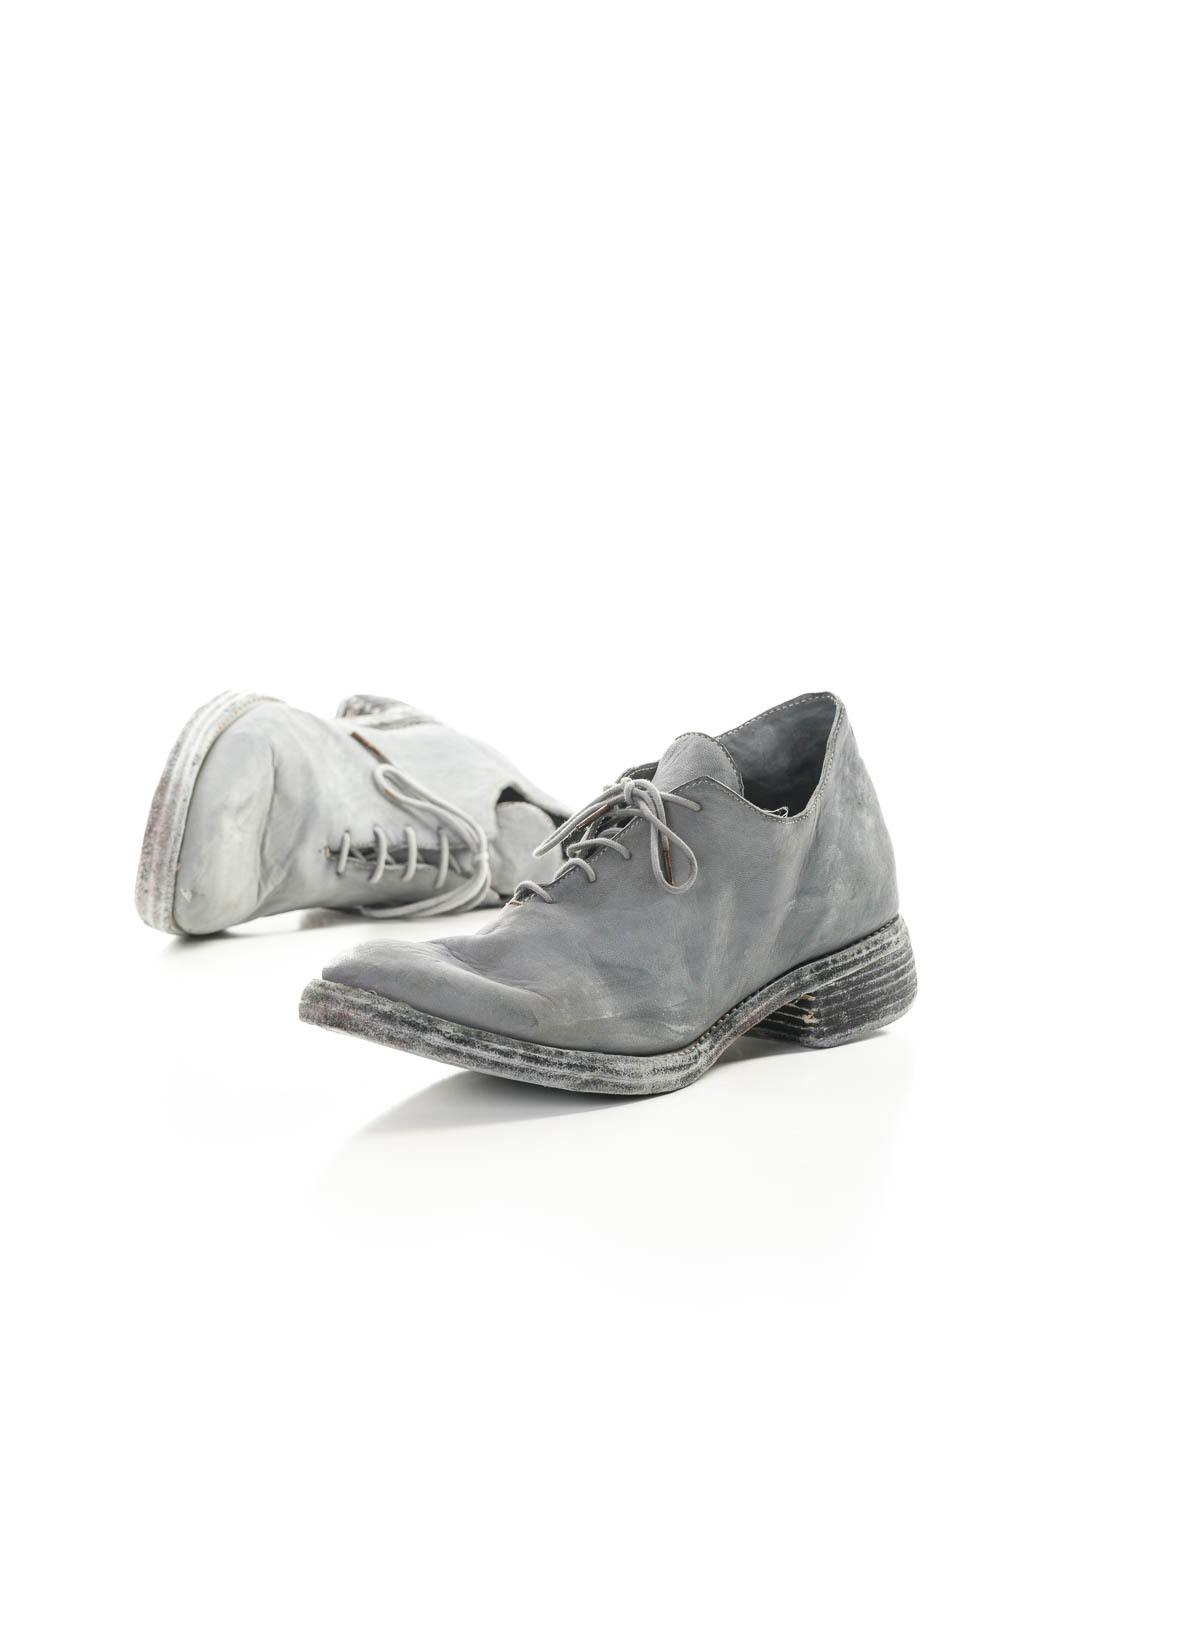 hide-m | A DICIANNOVEVENTITRE A1923 A1 One Leather Piece Shoe